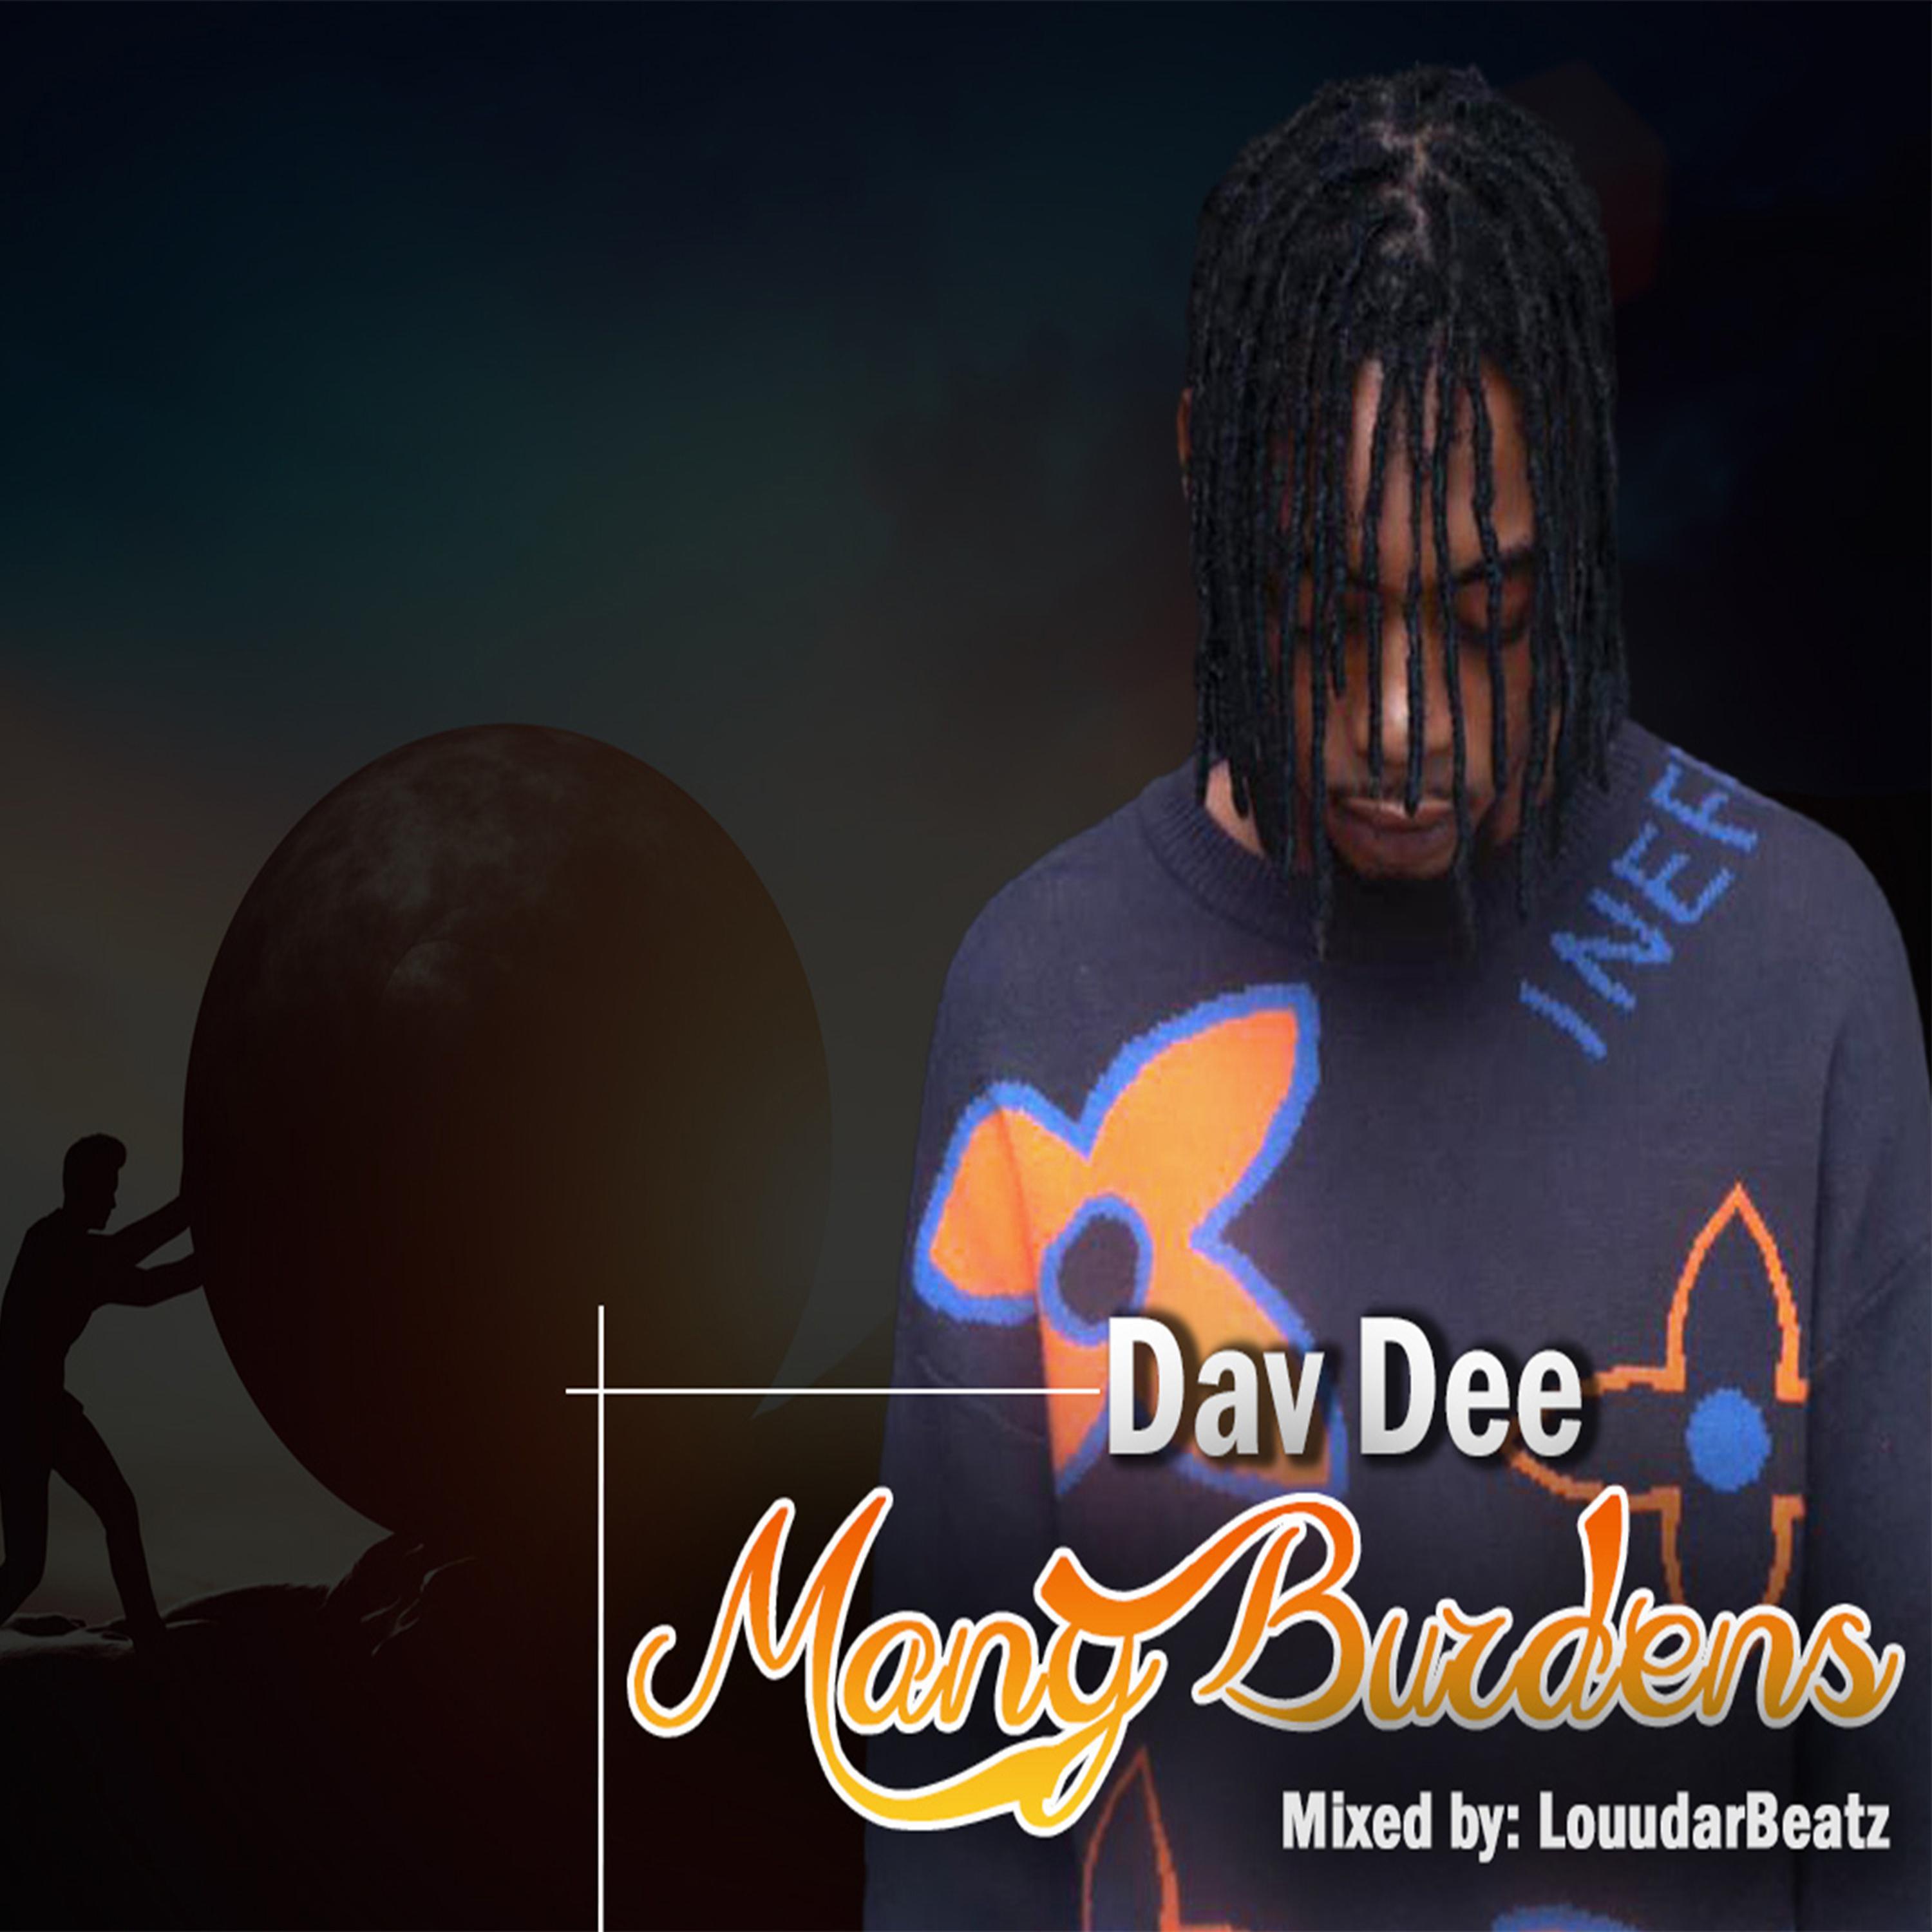 Dave Dee - Many Burdens